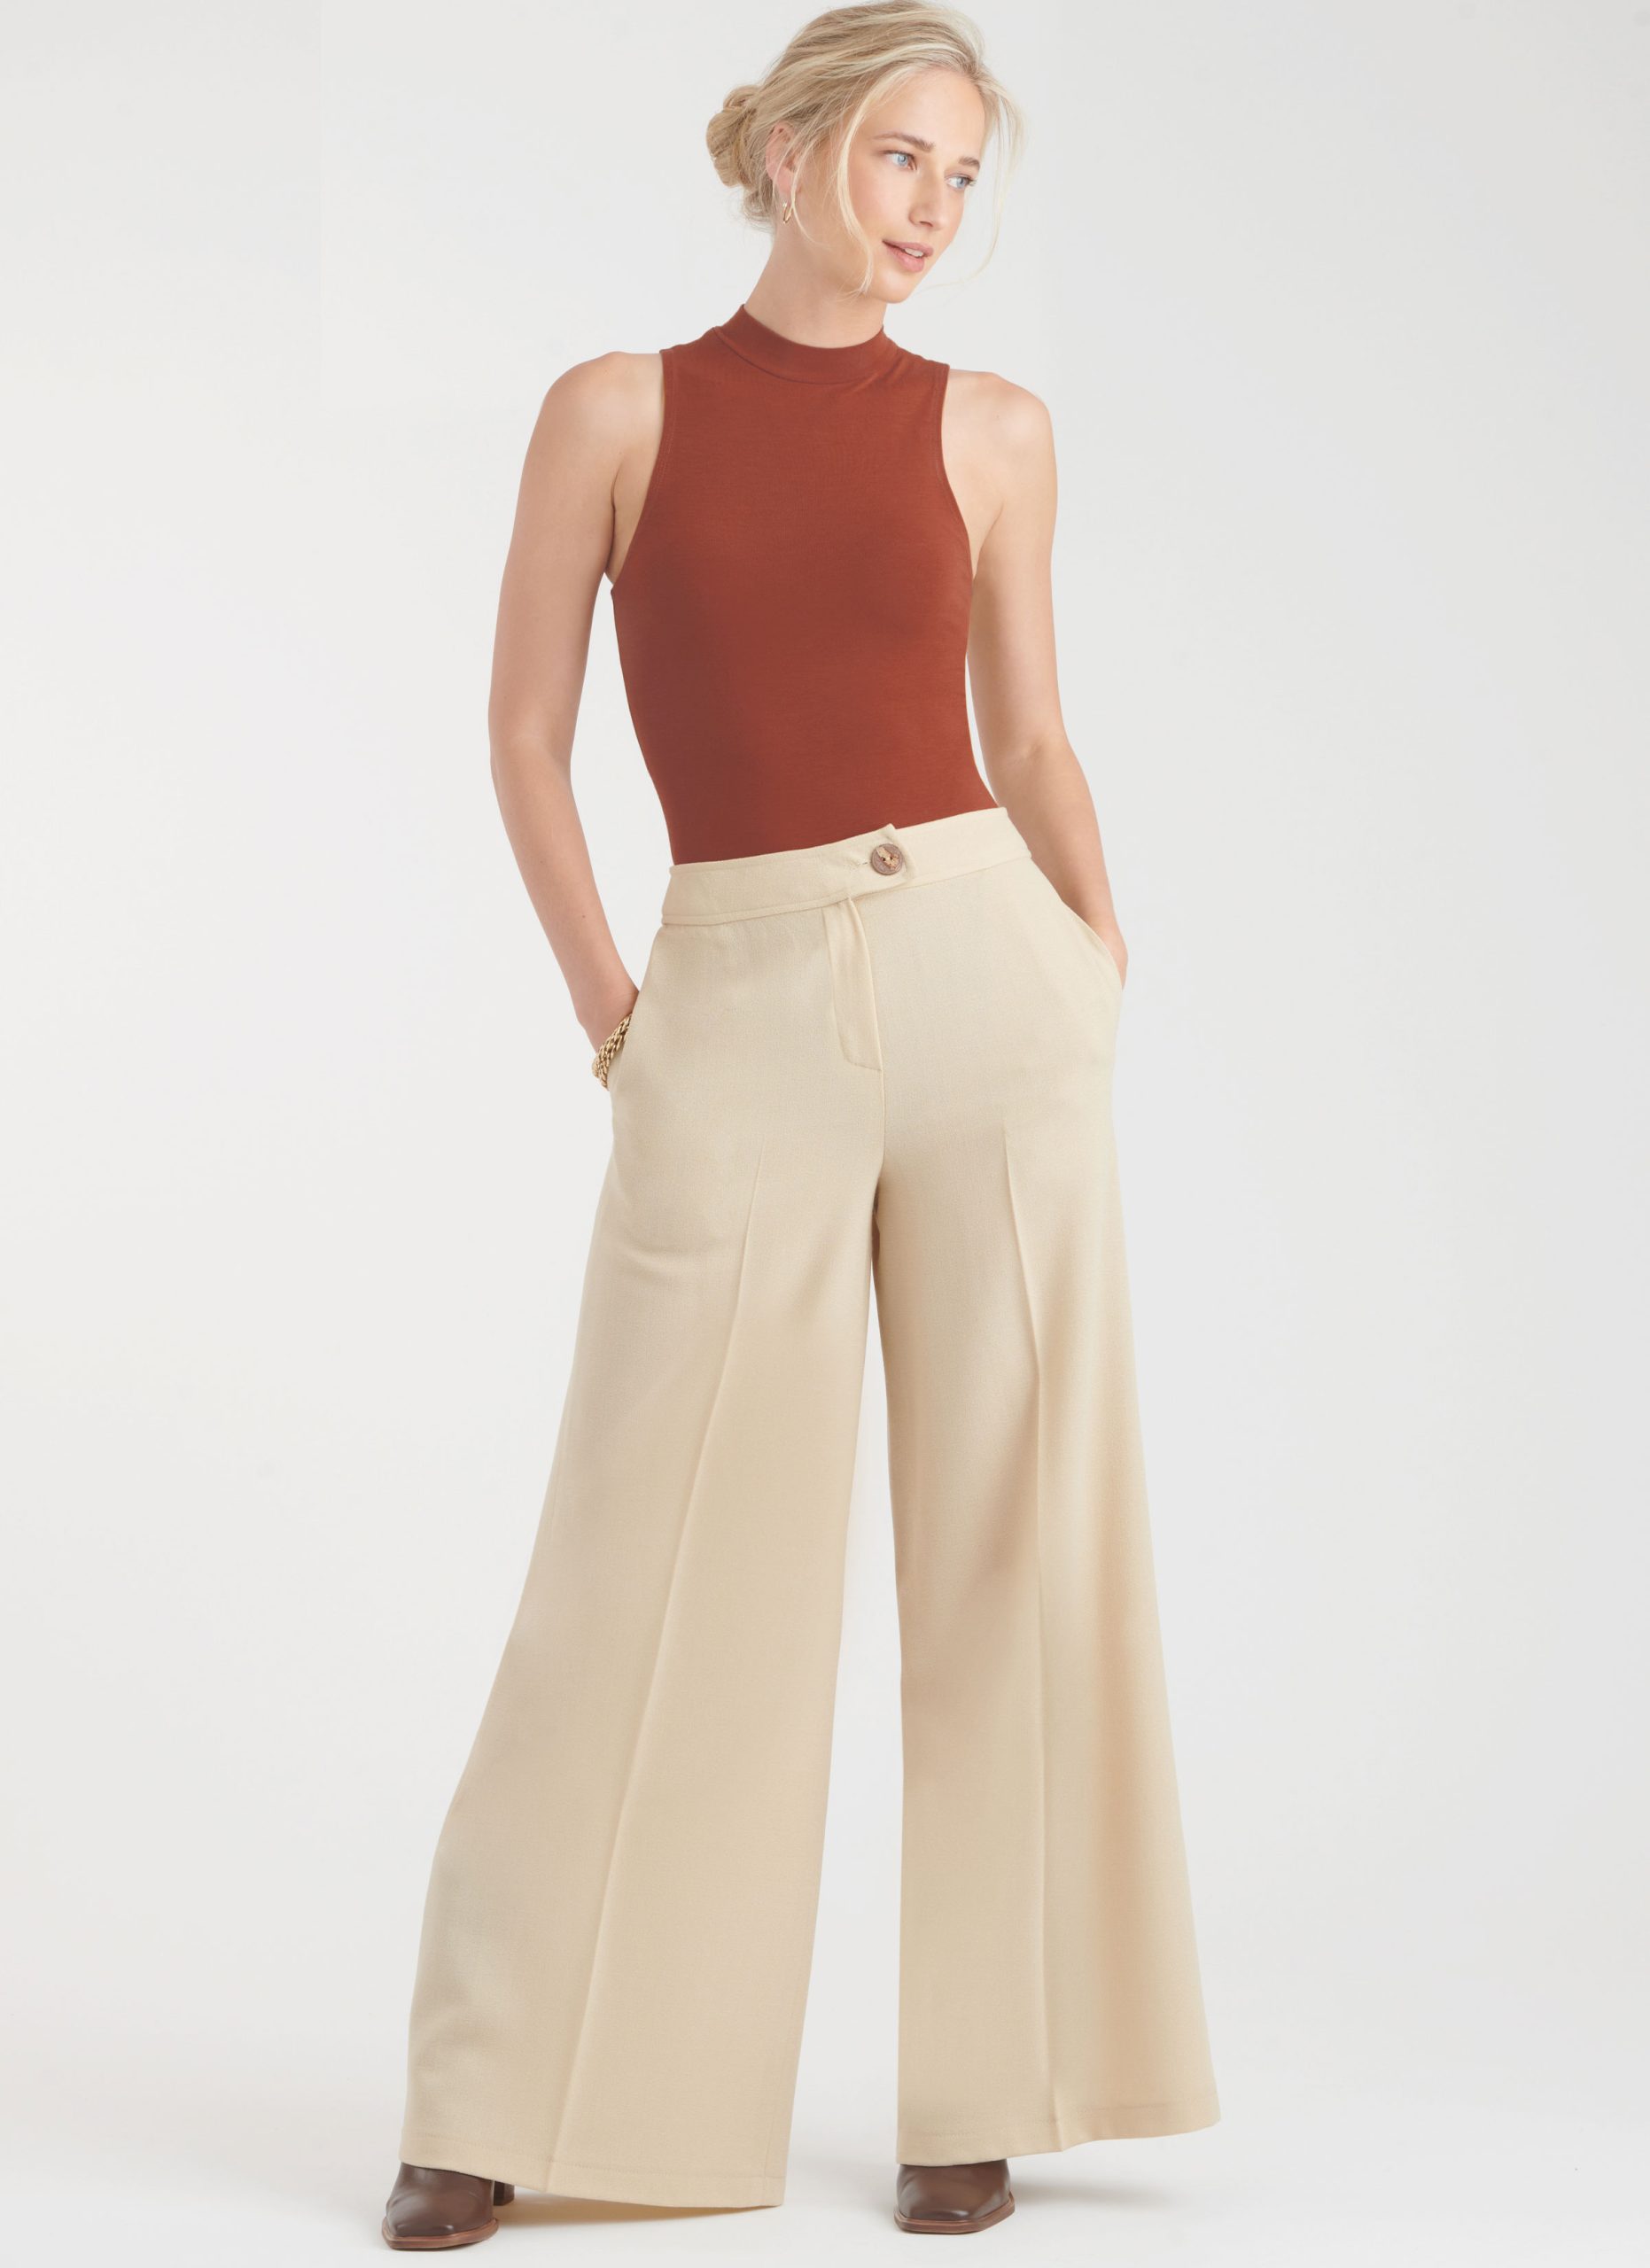 New Look Curves Black White Grid Plaid Skinny Pants Women's Size 14 Ne -  beyond exchange